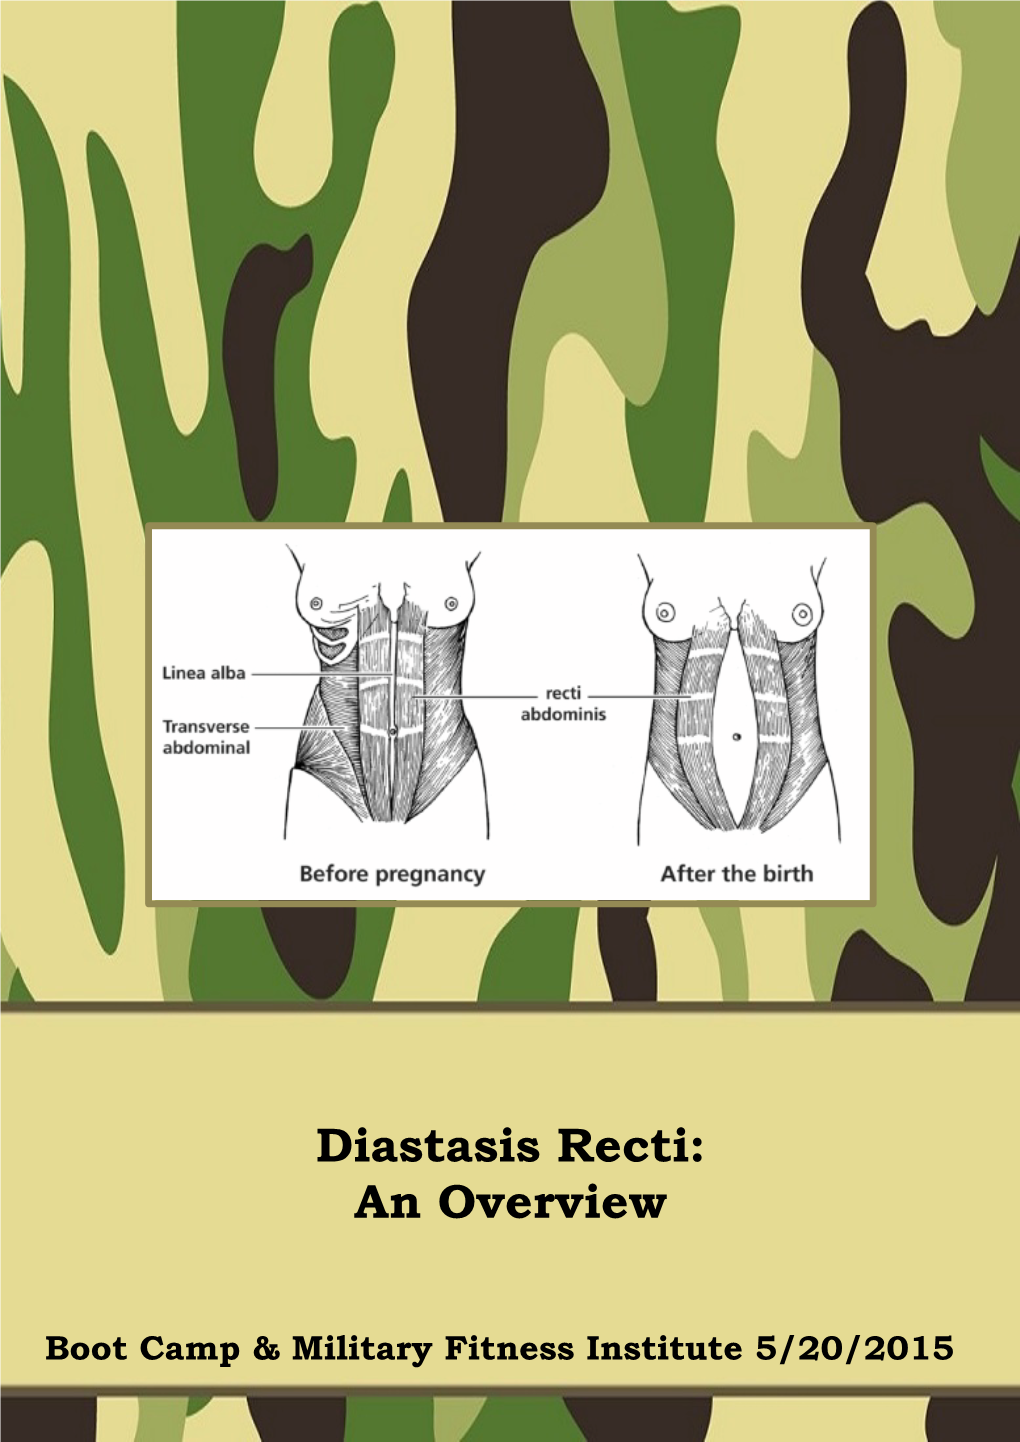 Diastasis Recti: an Overview